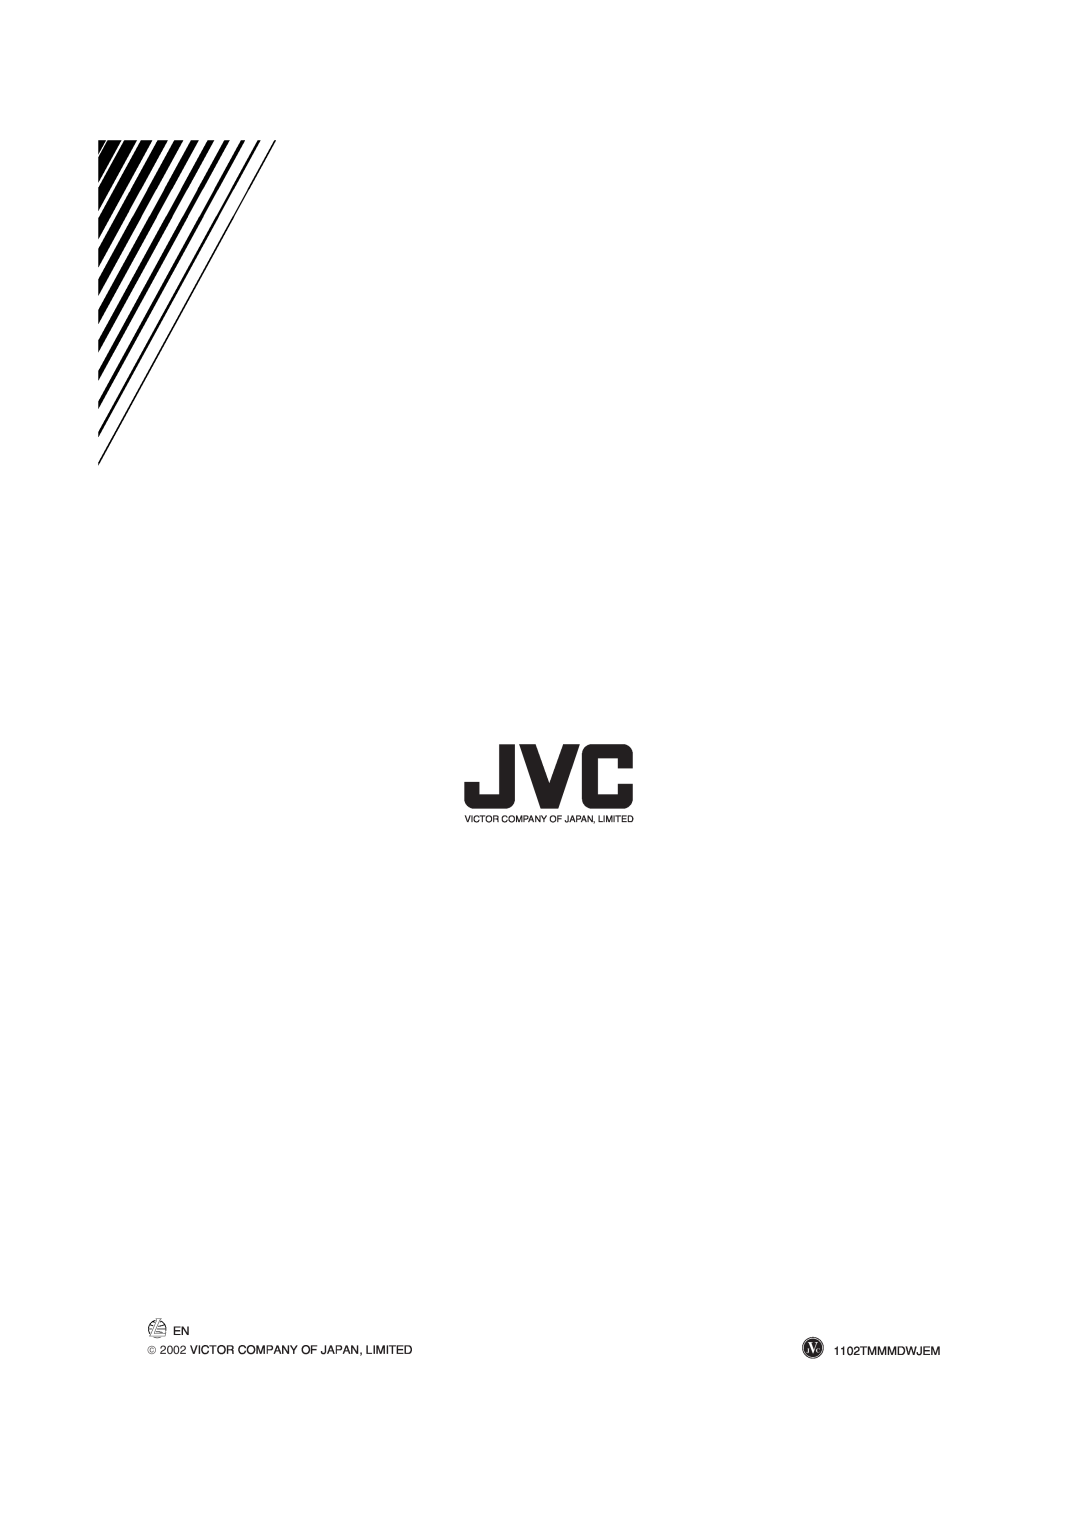 JVC TH-A75 manual  2002 VICTOR COMPANY OF JAPAN, LIMITED, 1102TMMMDWJEM, Victor Company Of Japan, Limited 